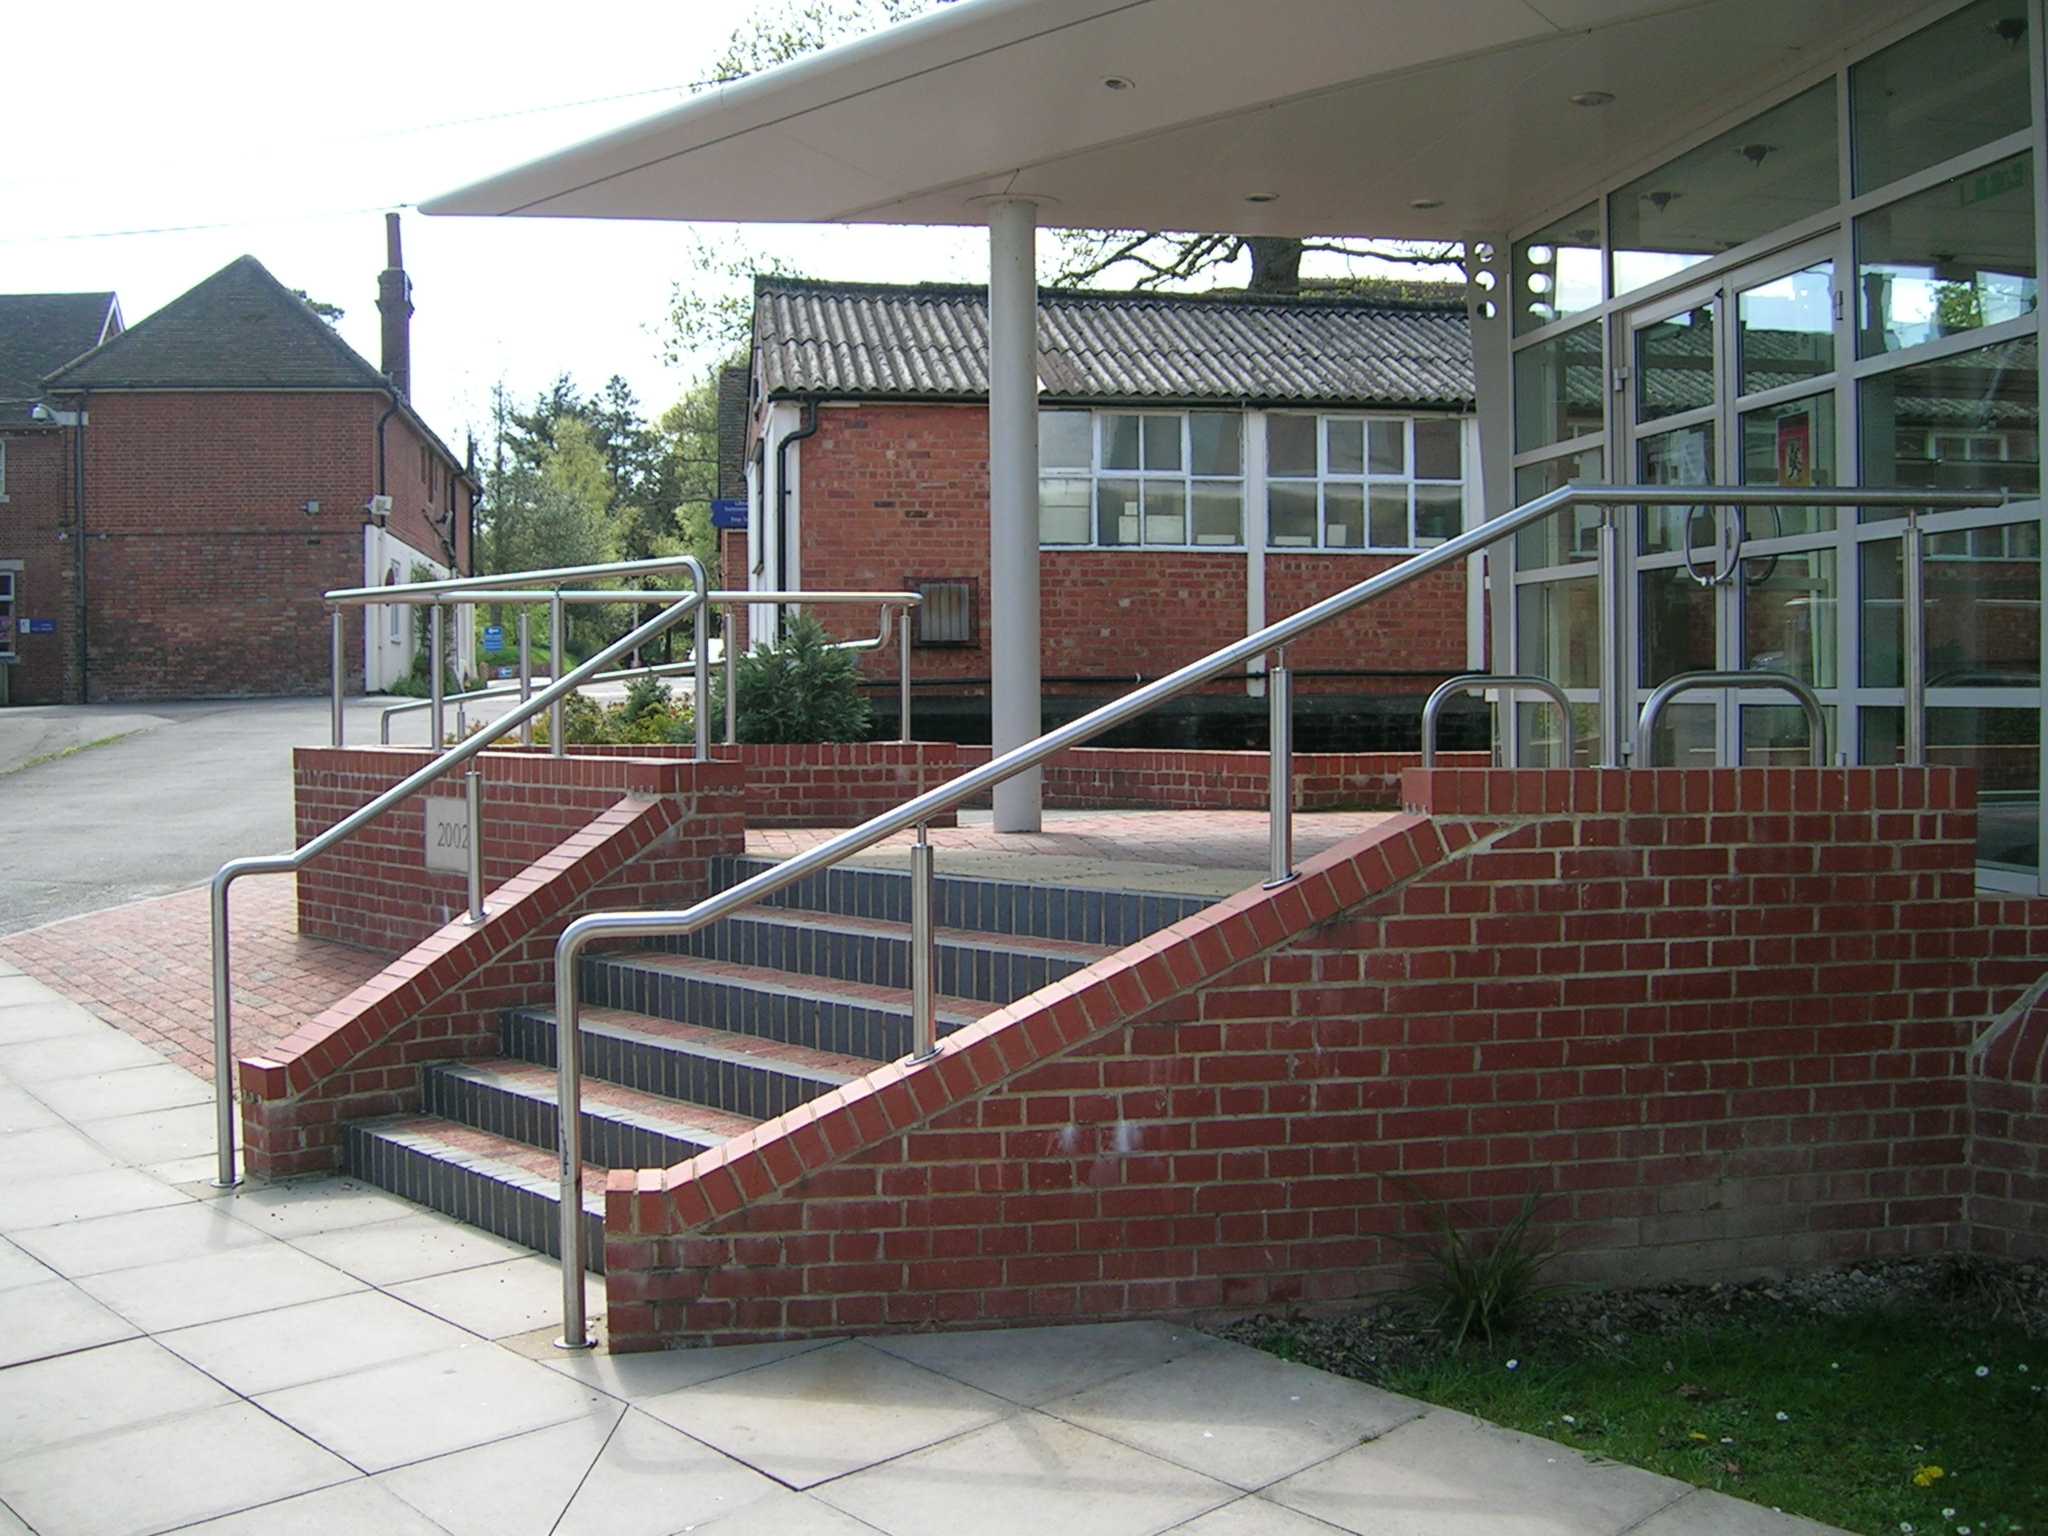 Stainless steel handrail on exterior steps